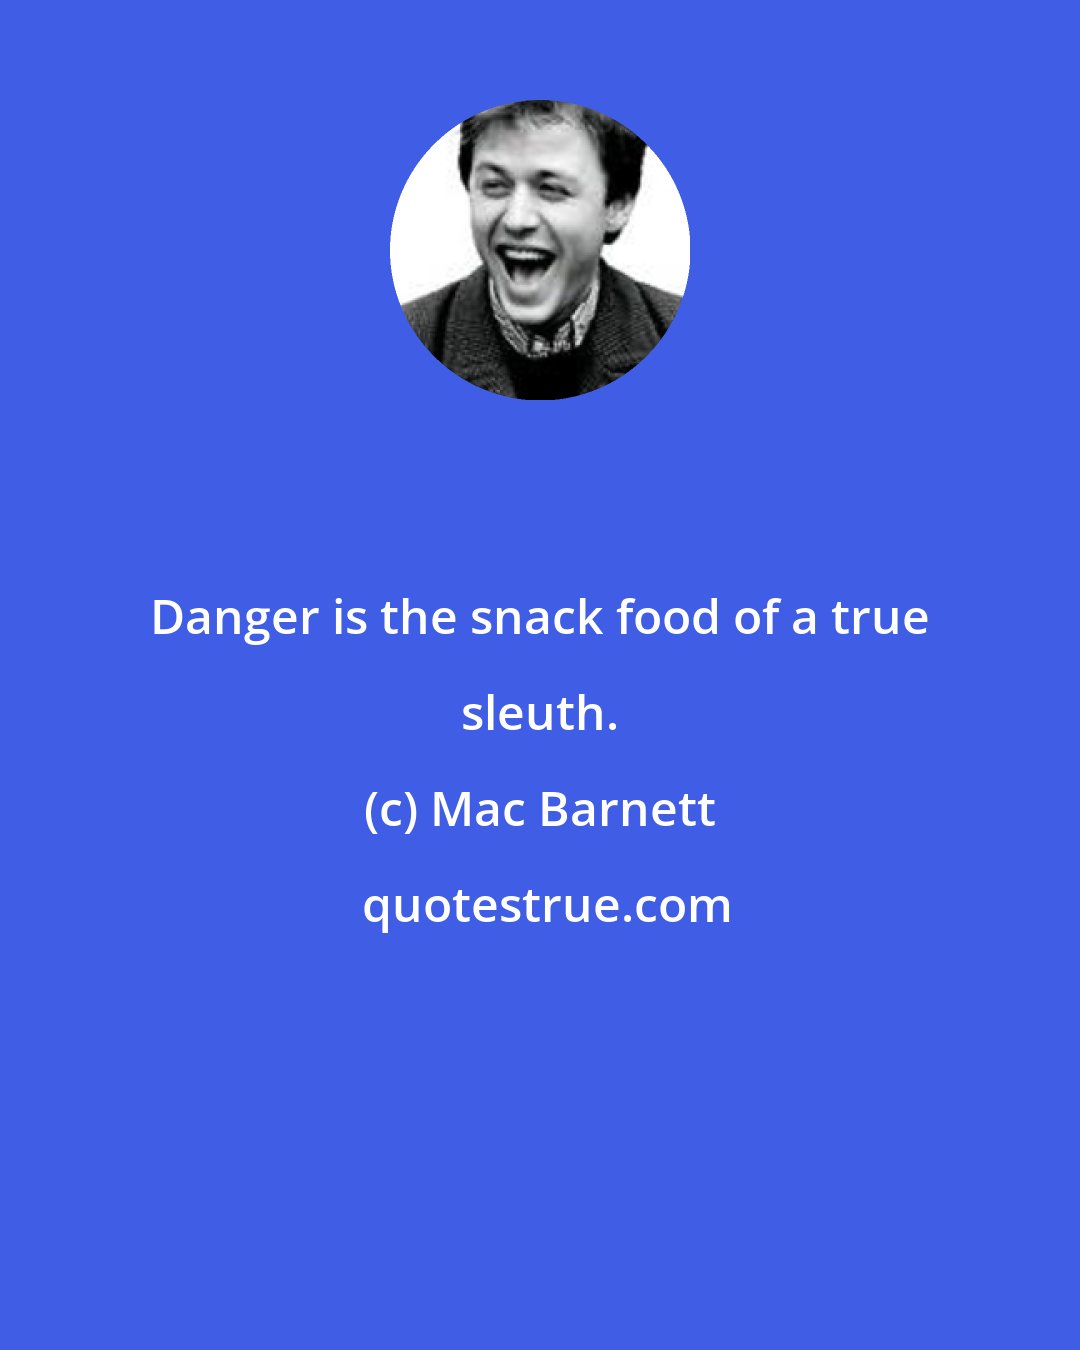 Mac Barnett: Danger is the snack food of a true sleuth.